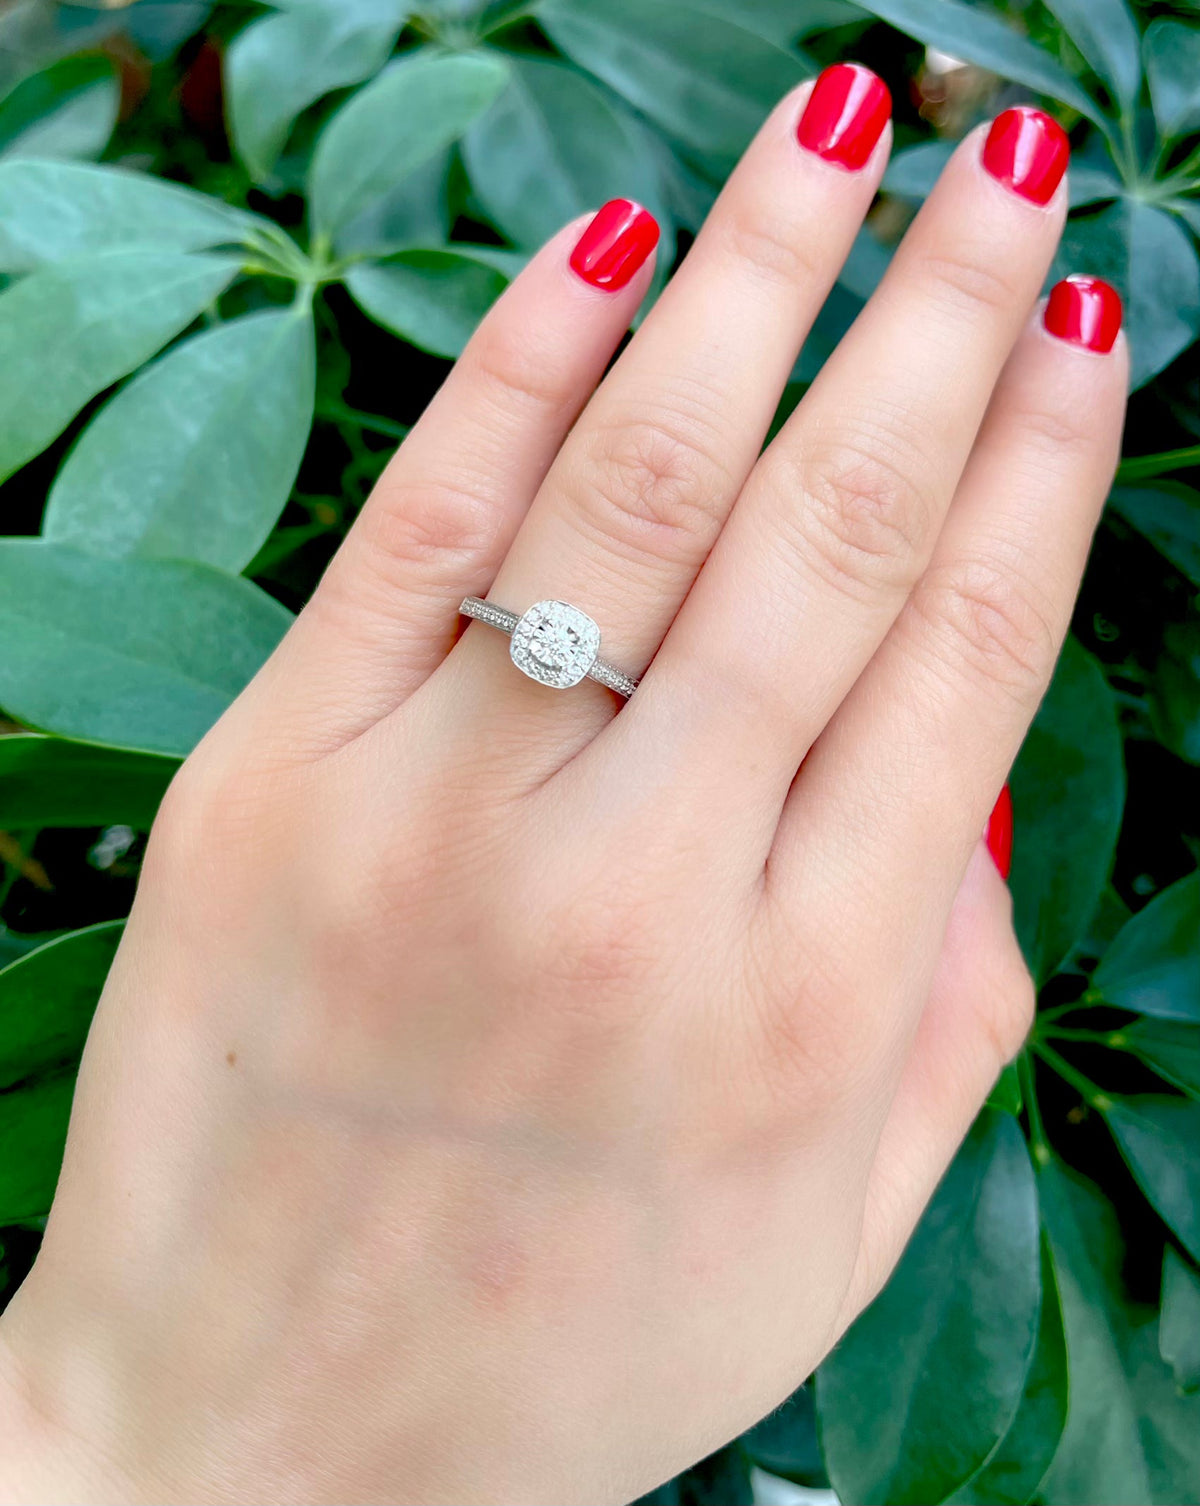 10K White Gold 0.19cttw Diamond Halo Engagement Ring - Size 7.25